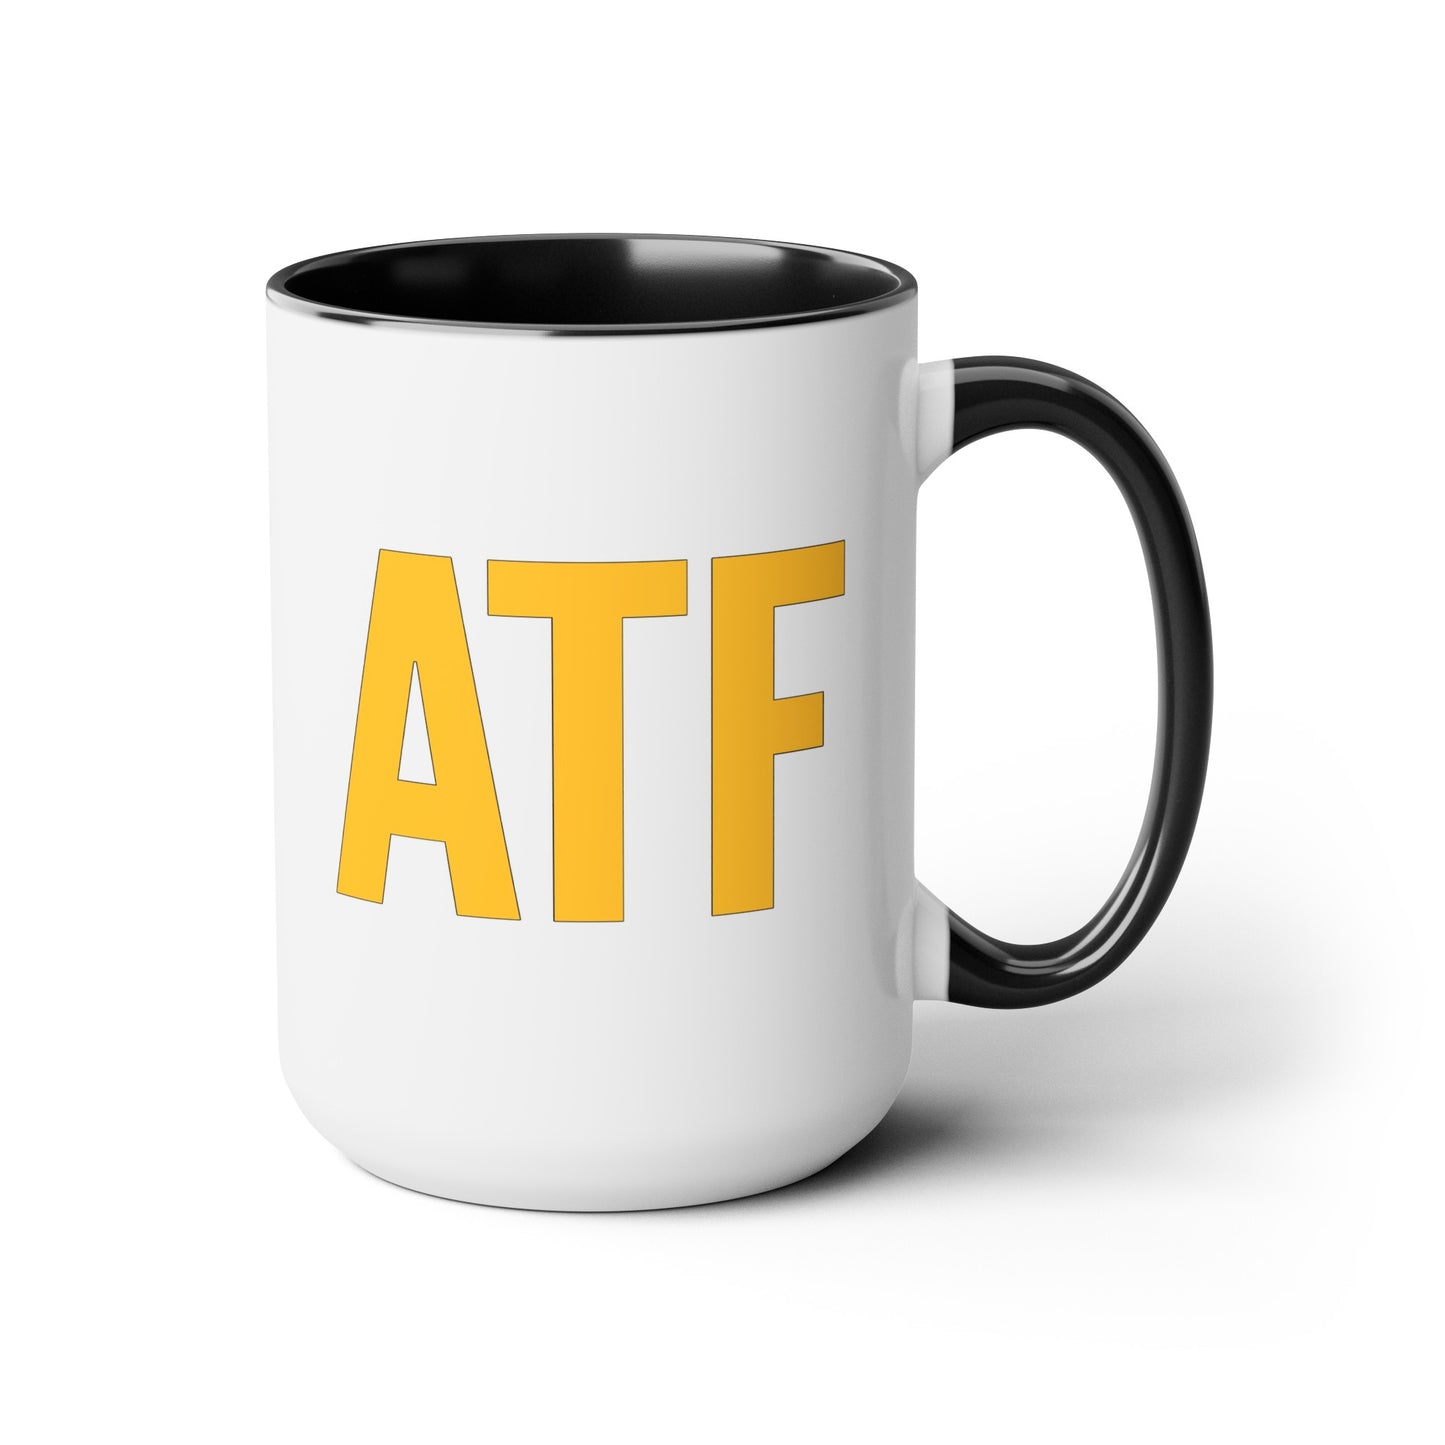 ATF Coffee Mug - Double Sided Black Accent White Ceramic 15oz by TheGlassyLass.com